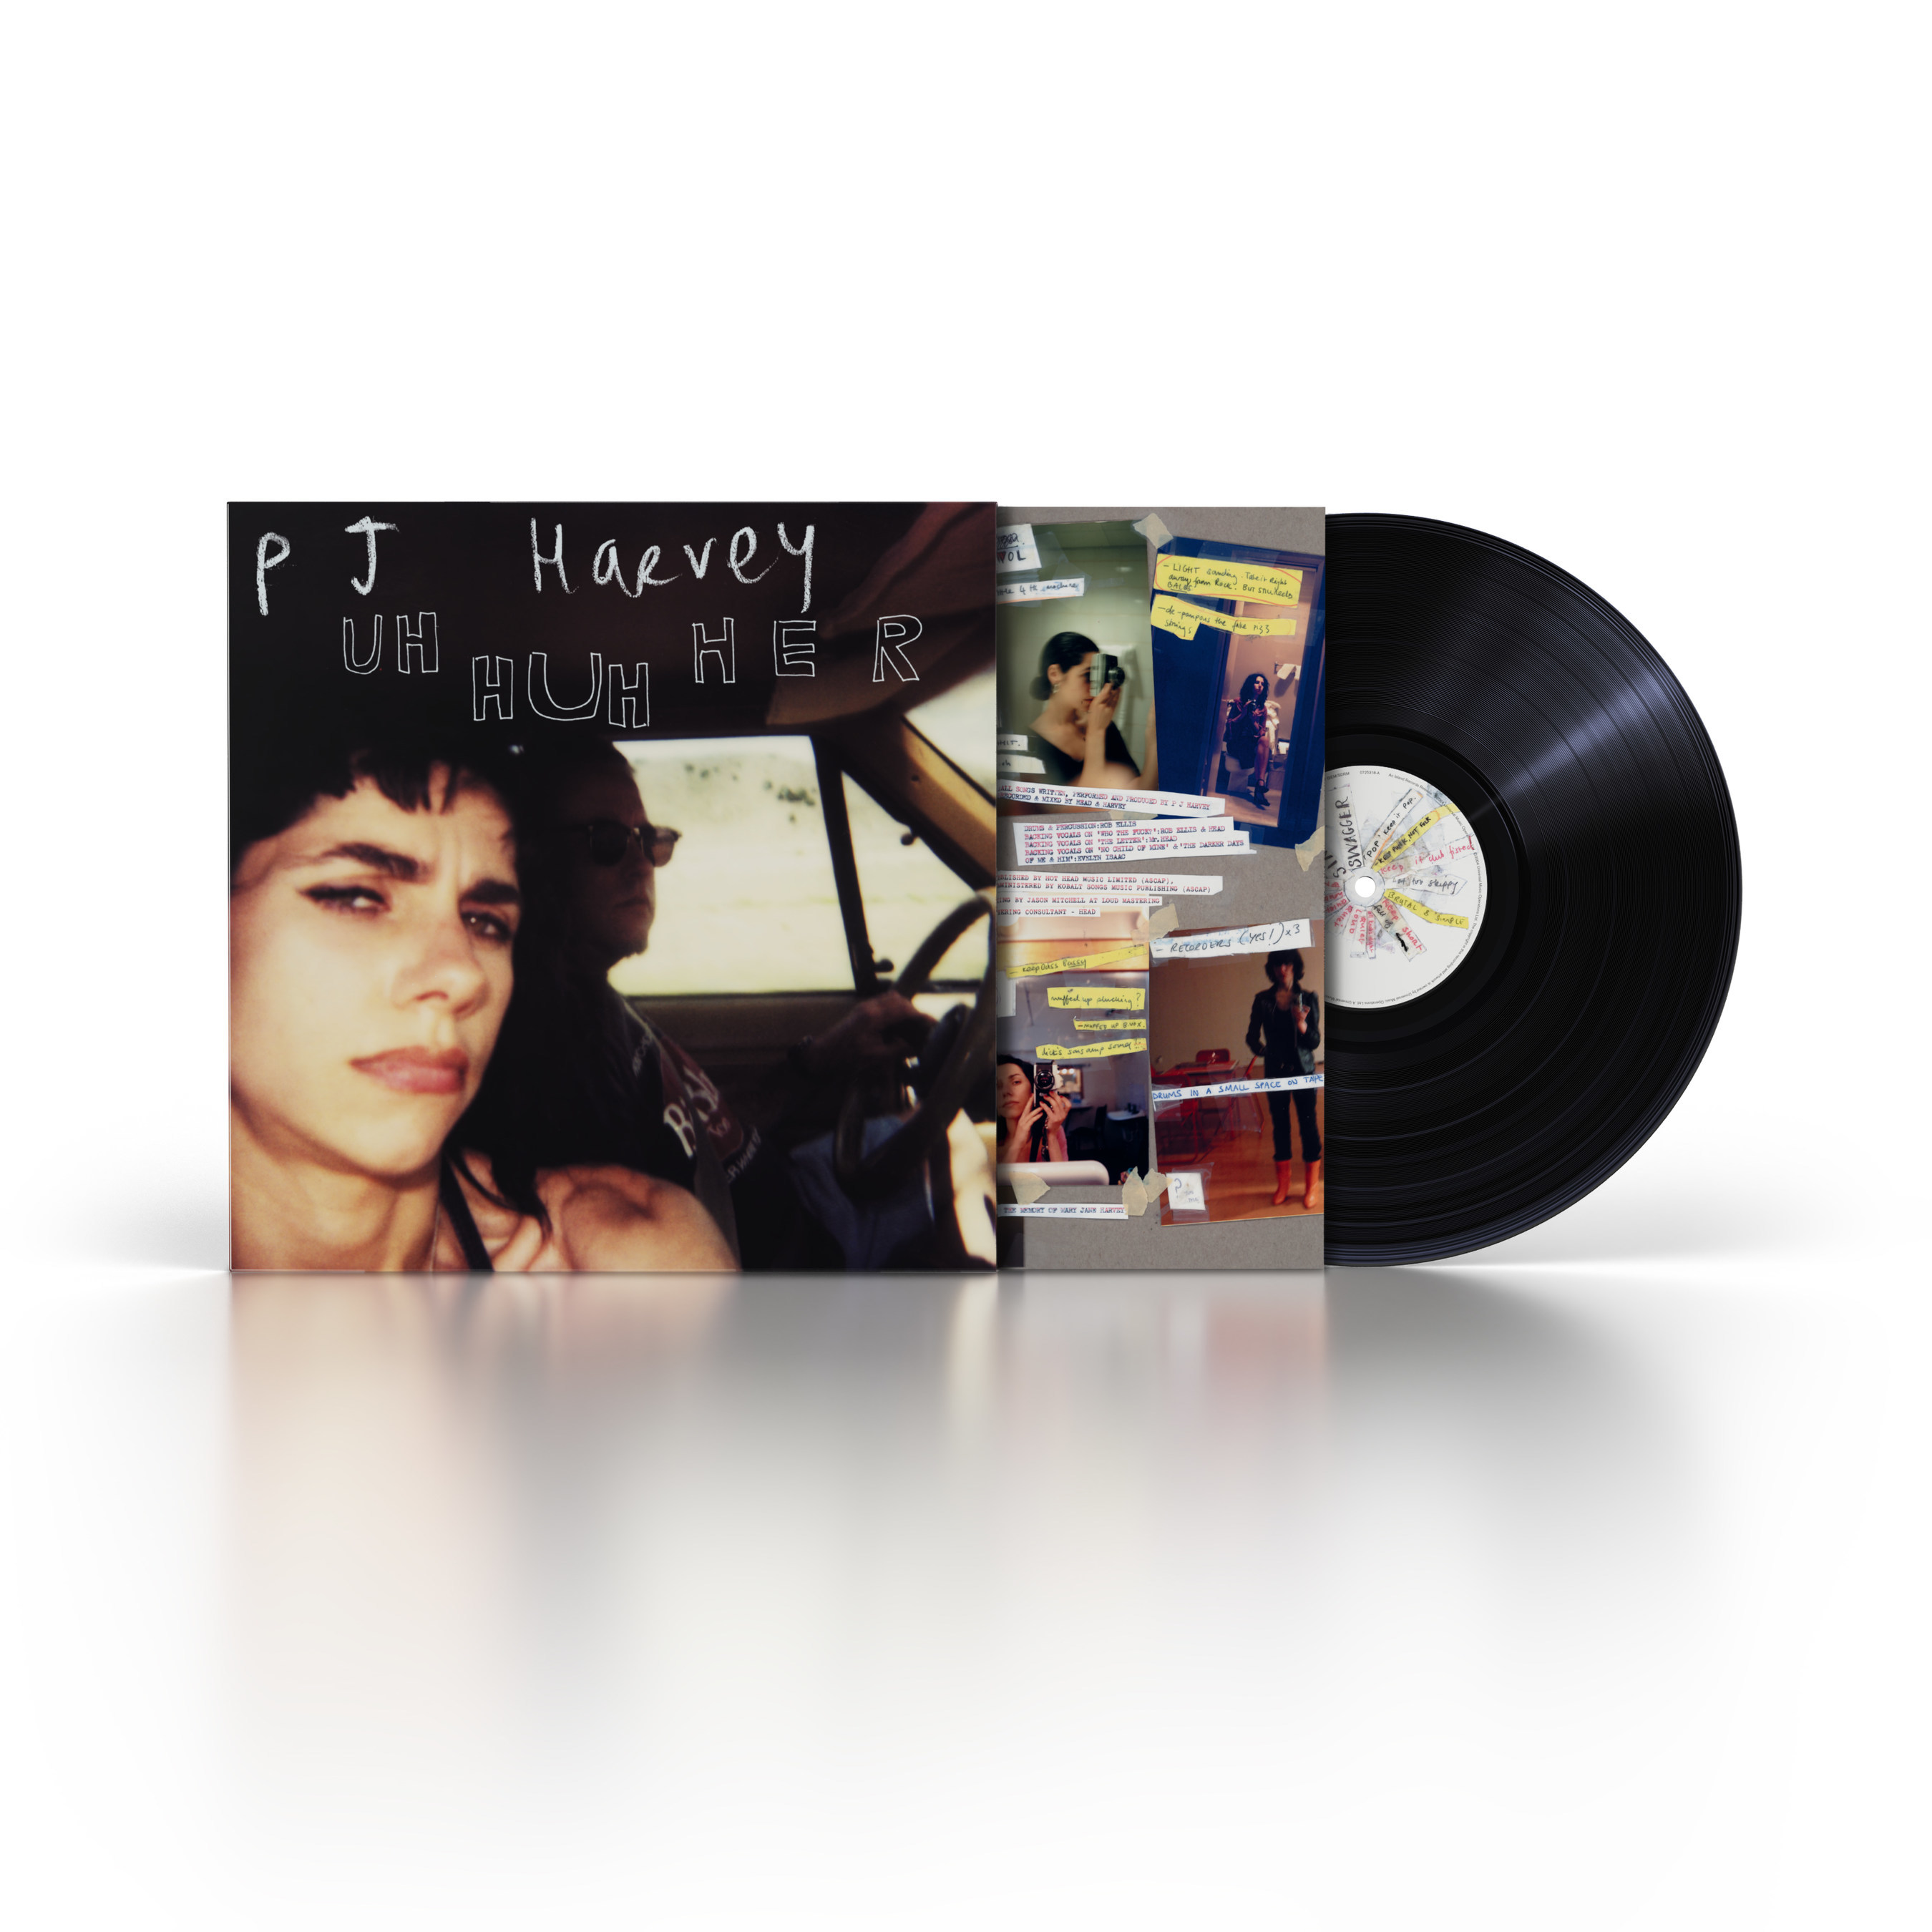 Pj Harvey Uh Huh Her Available April 30 On Vinyl